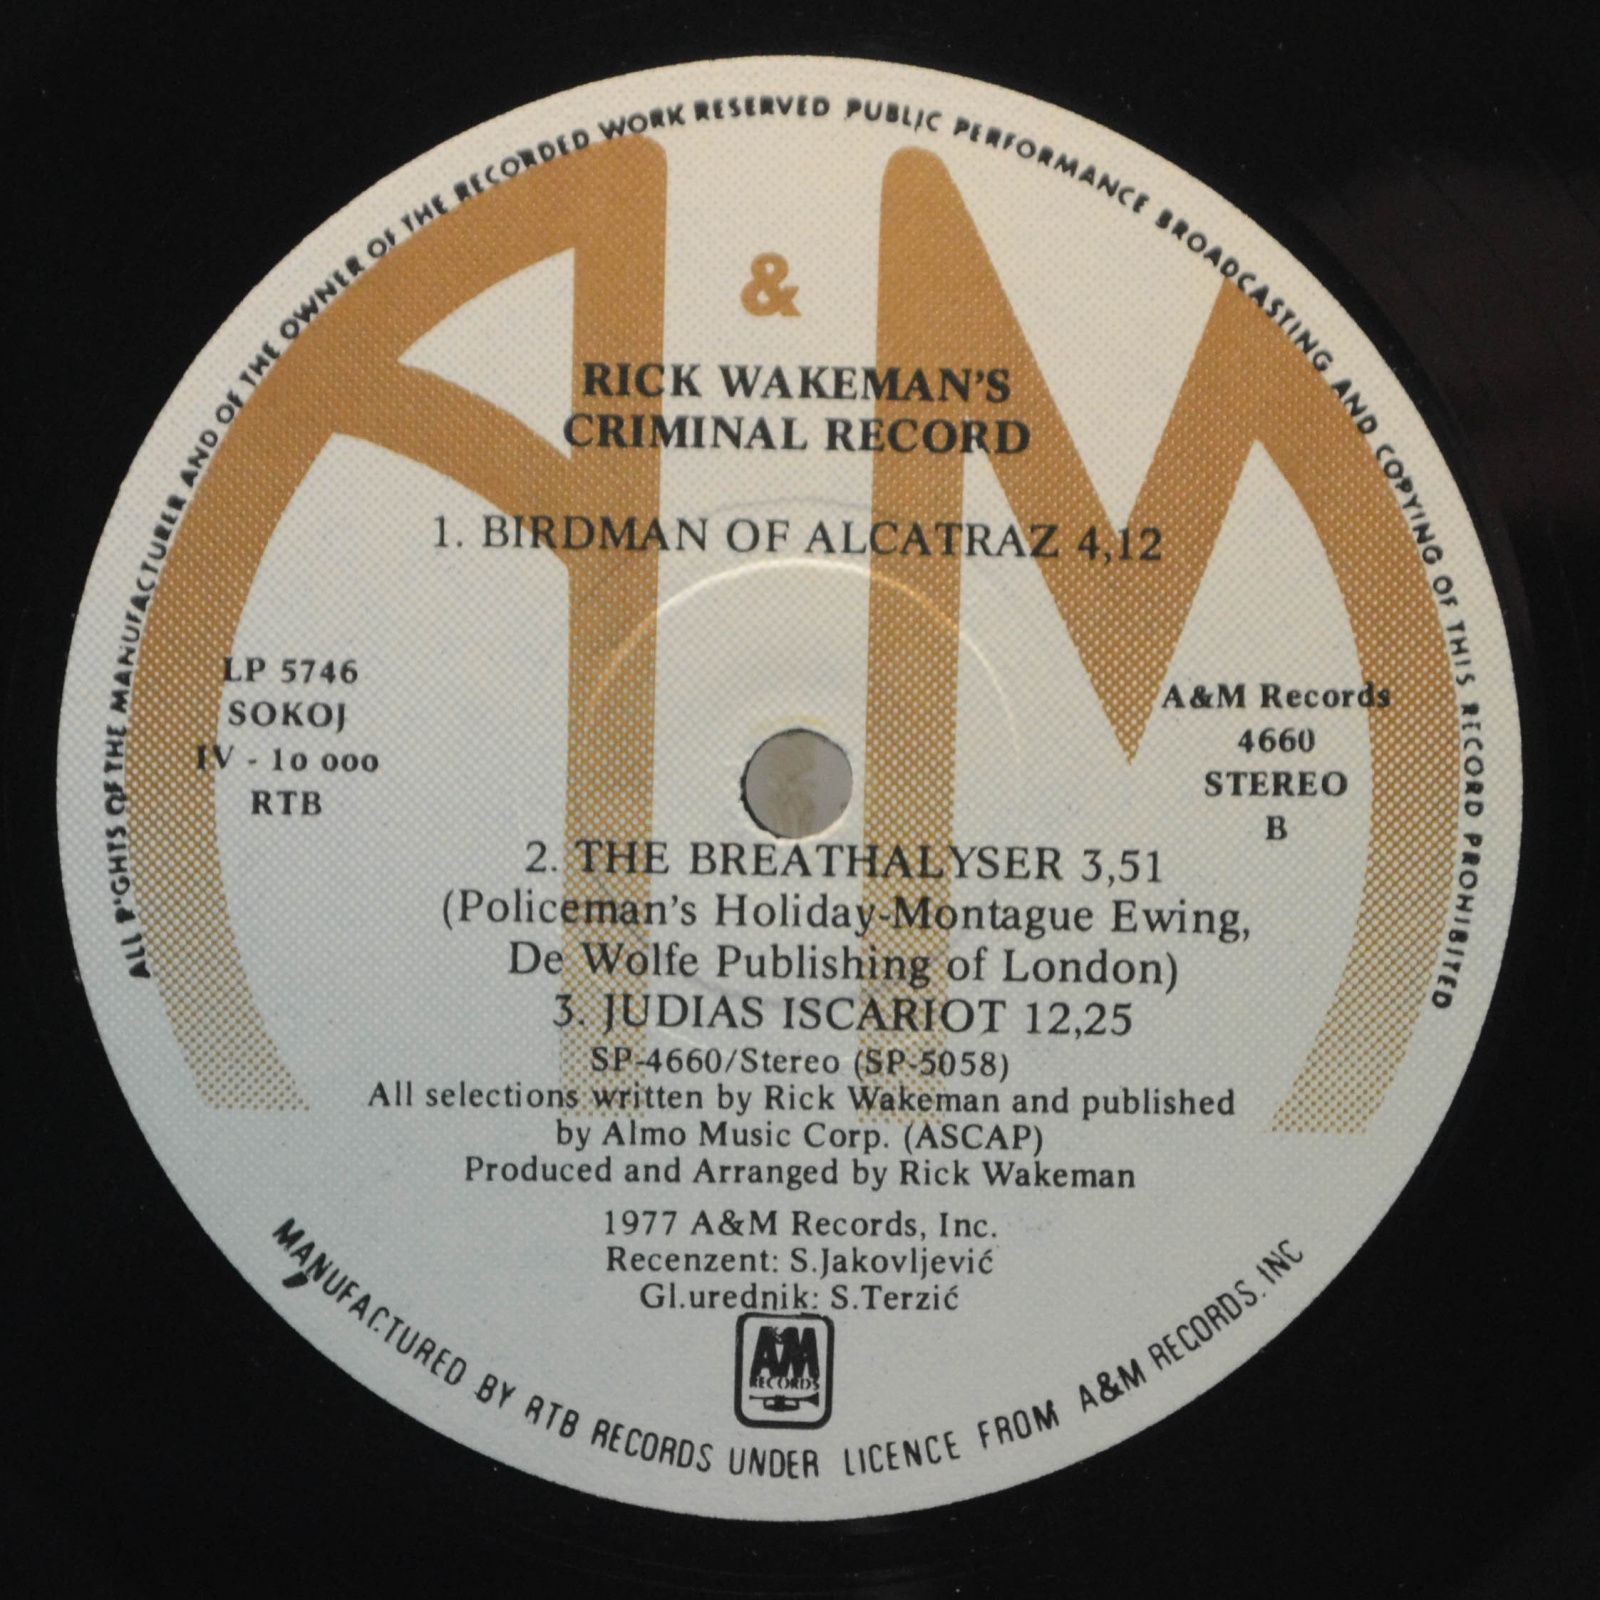 Rick Wakeman — Rick Wakeman's Criminal Record, 1978